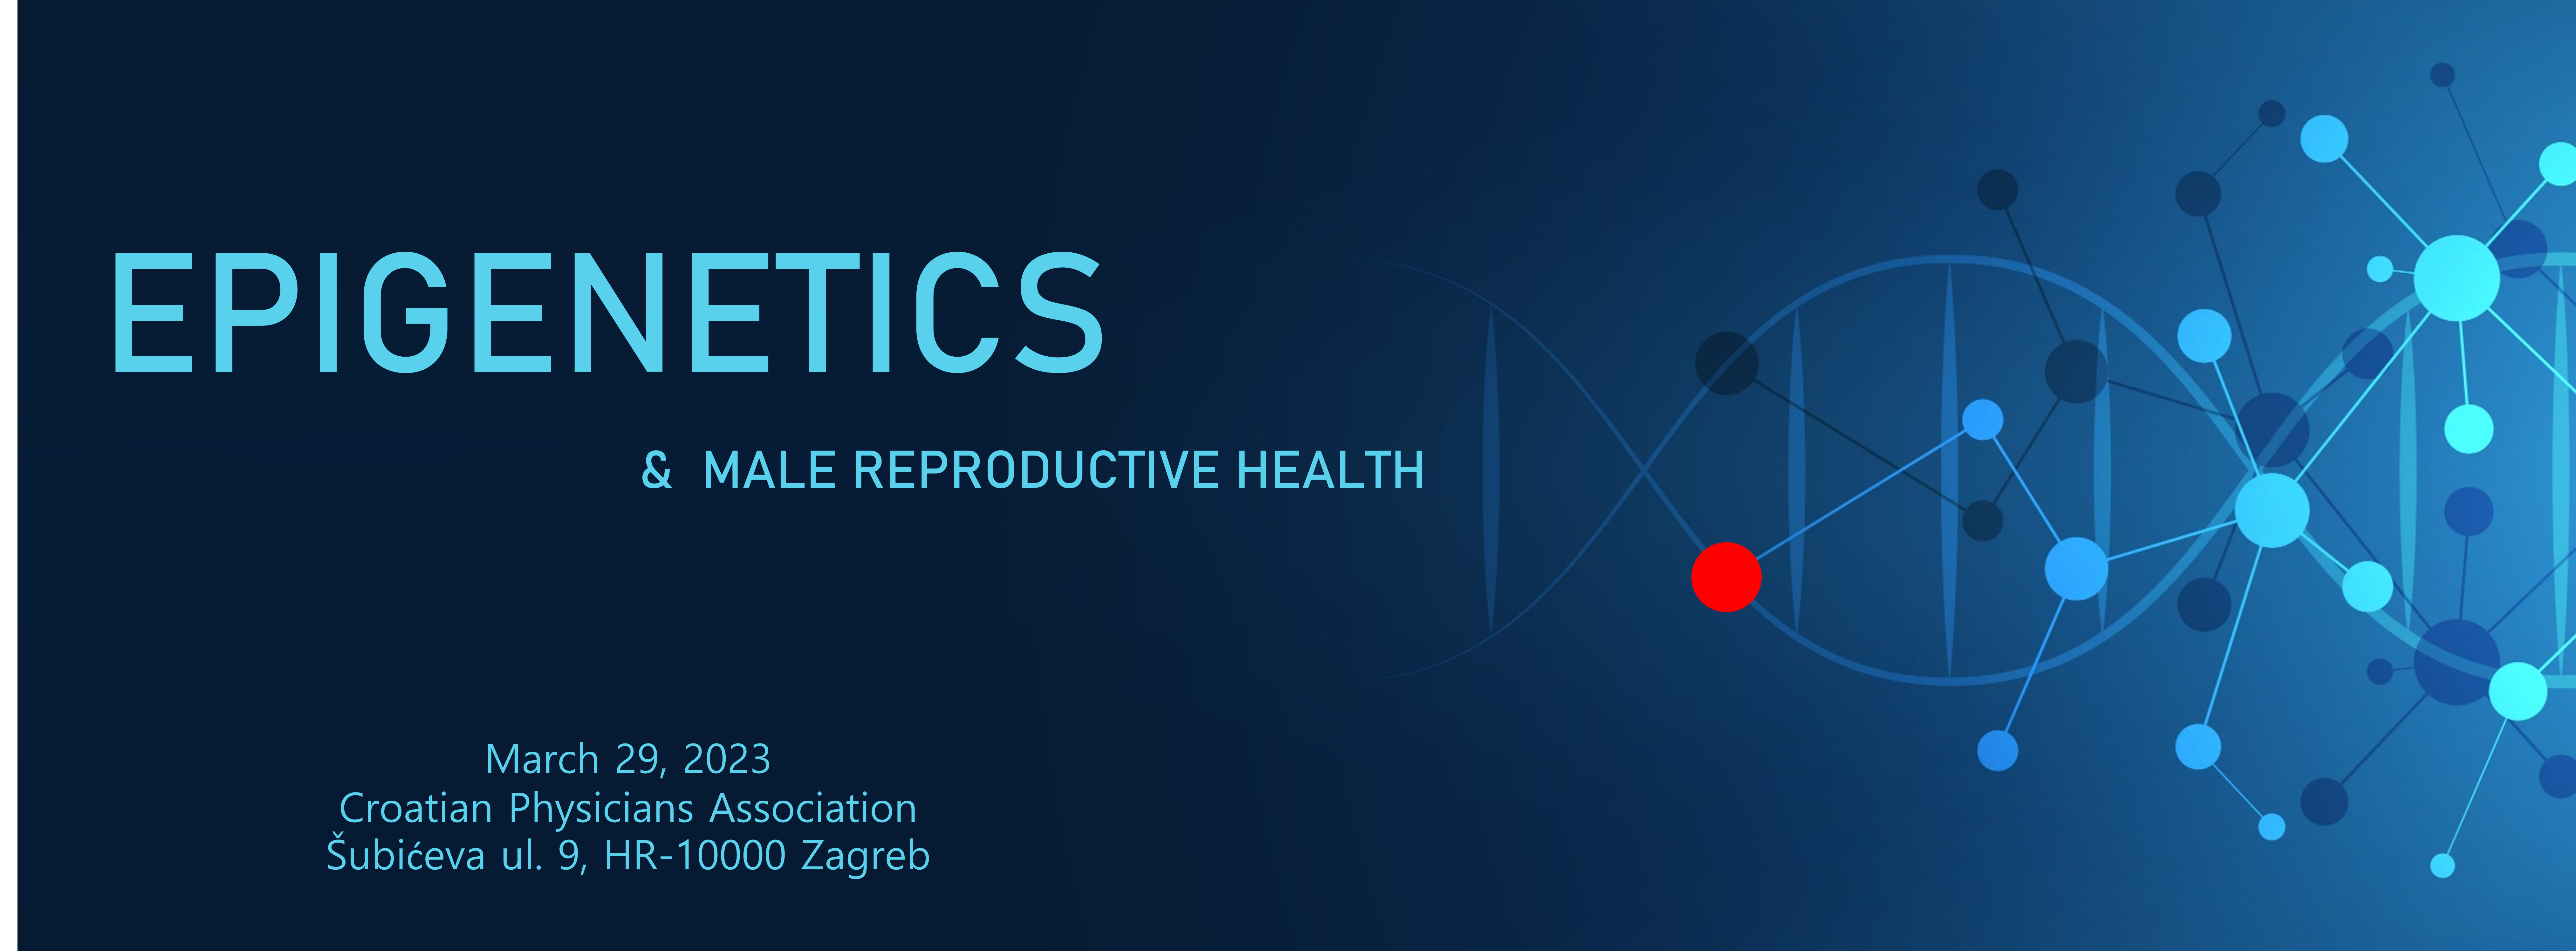 Simpozij “Epigenetics & Male Reproductive Health”